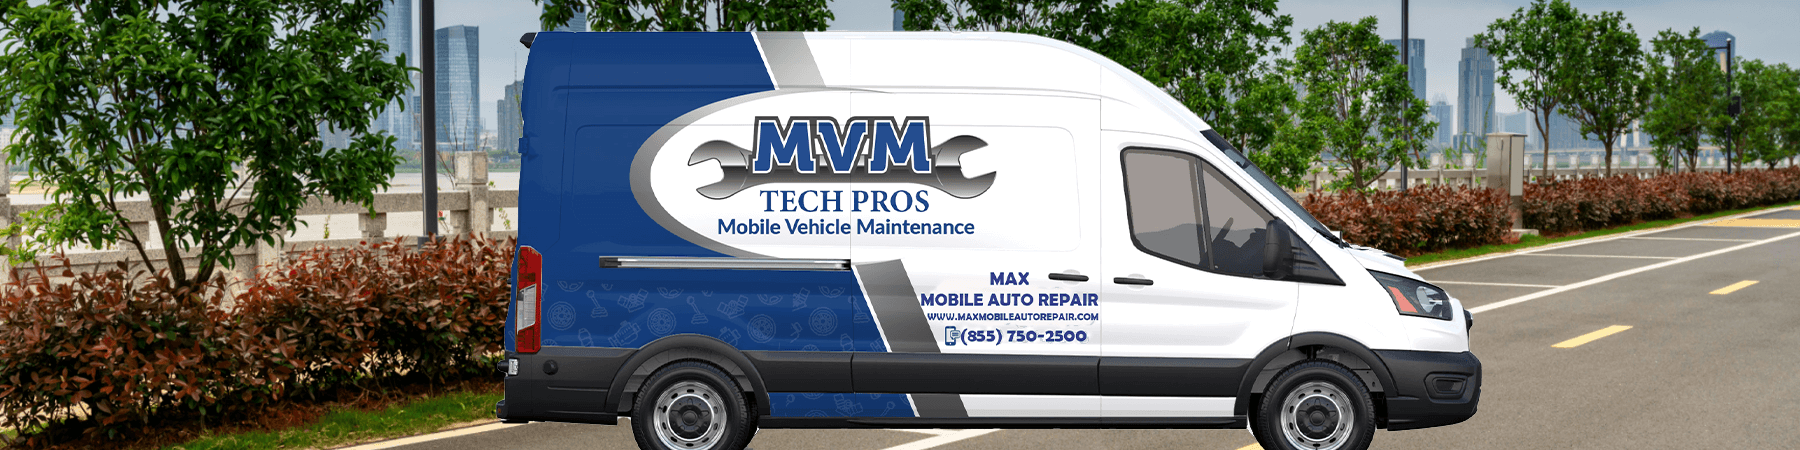 mvm tech pros professional level services